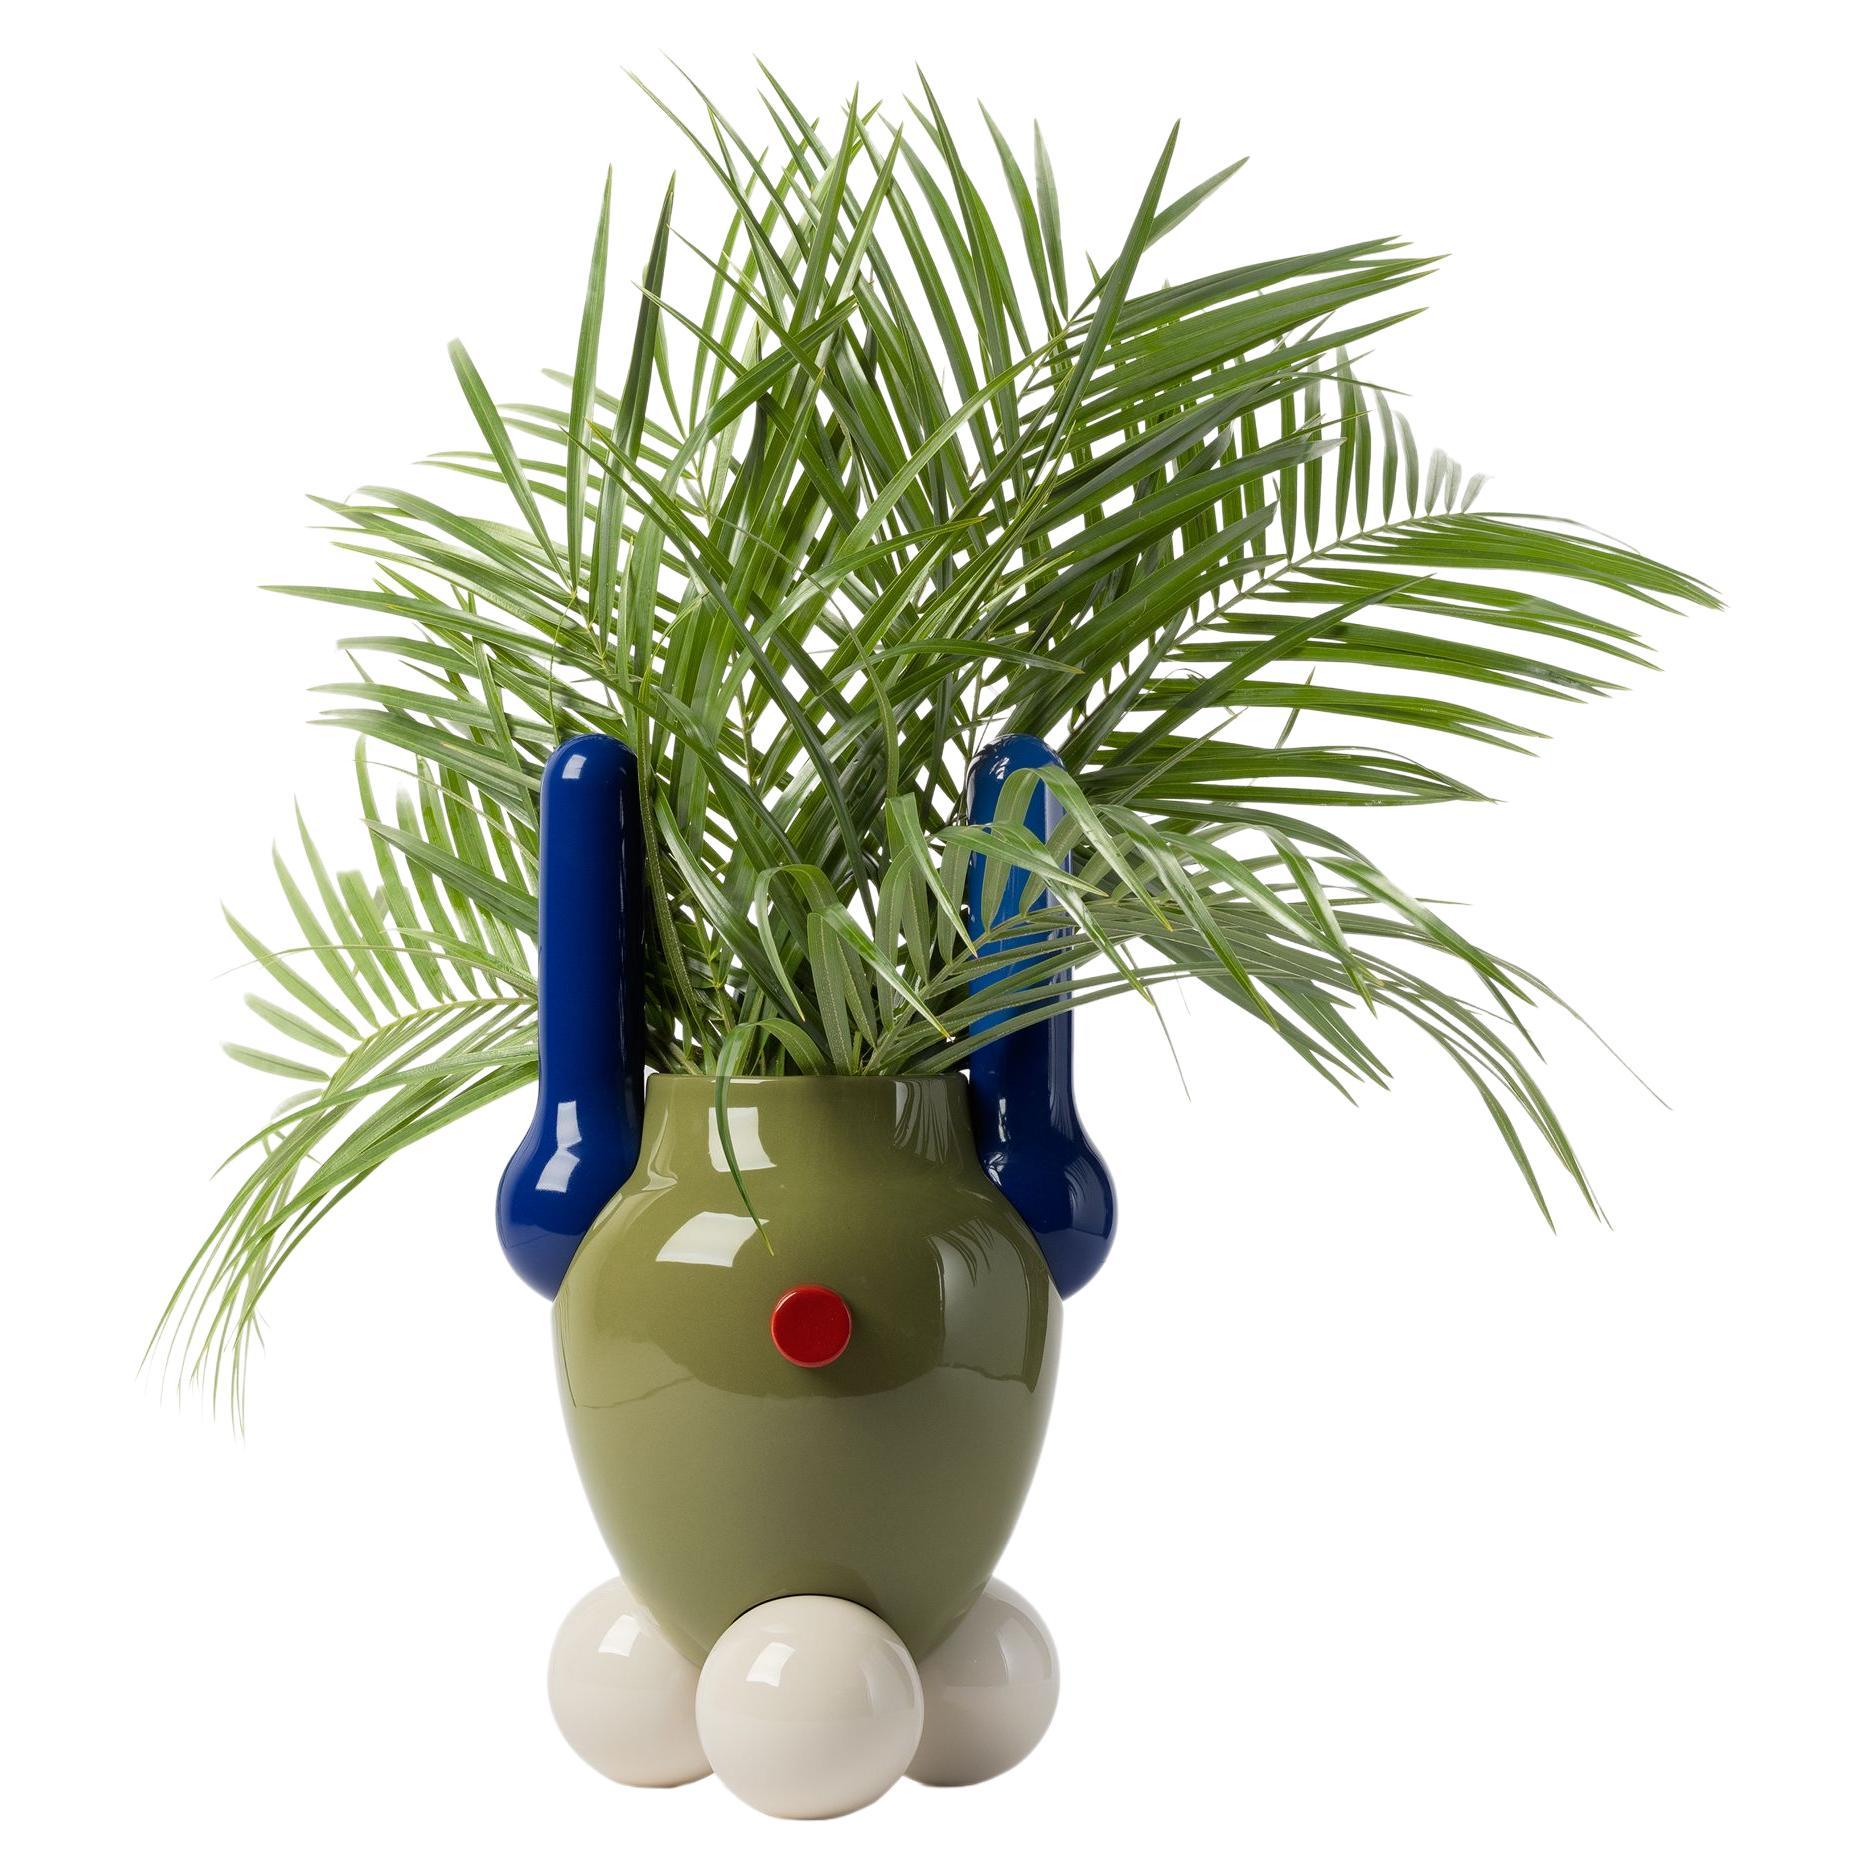 Contemporary Glazed Ceramic Explorer Vase No.1 by Jaime Hayon, green, blue white